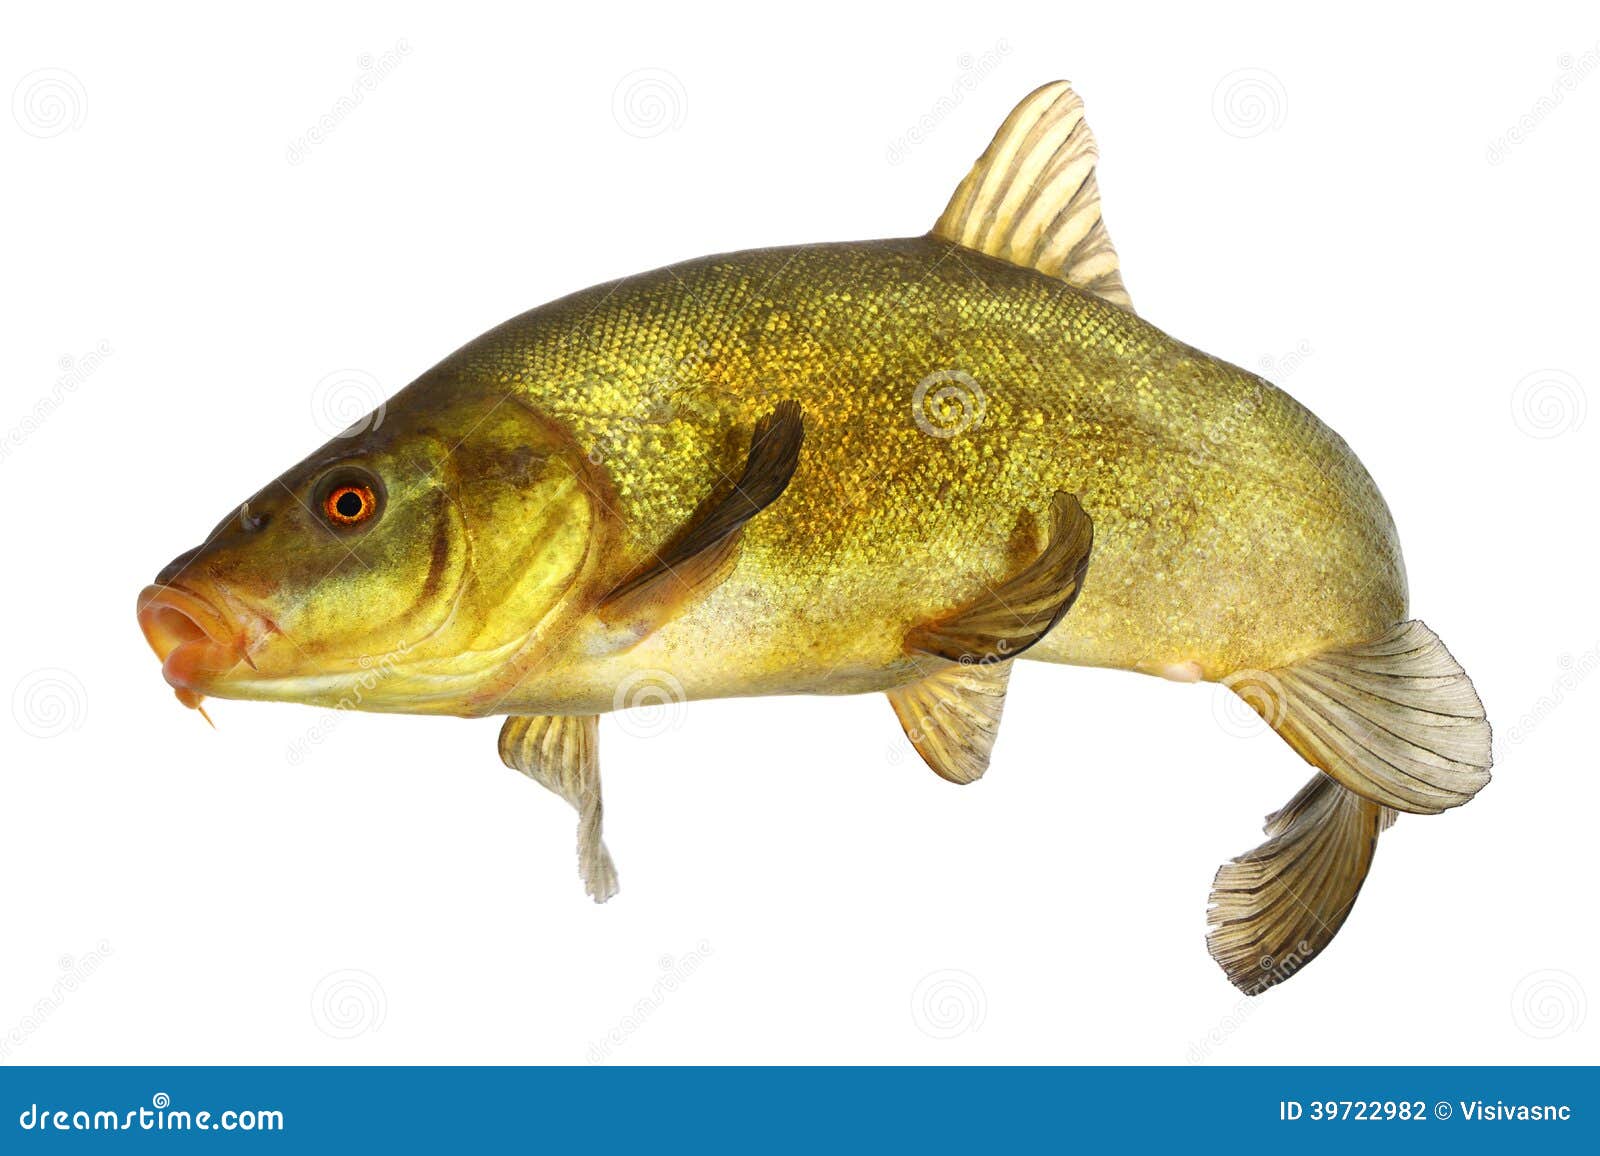 110 Carp Fish Lips Stock Photos - Free & Royalty-Free Stock Photos